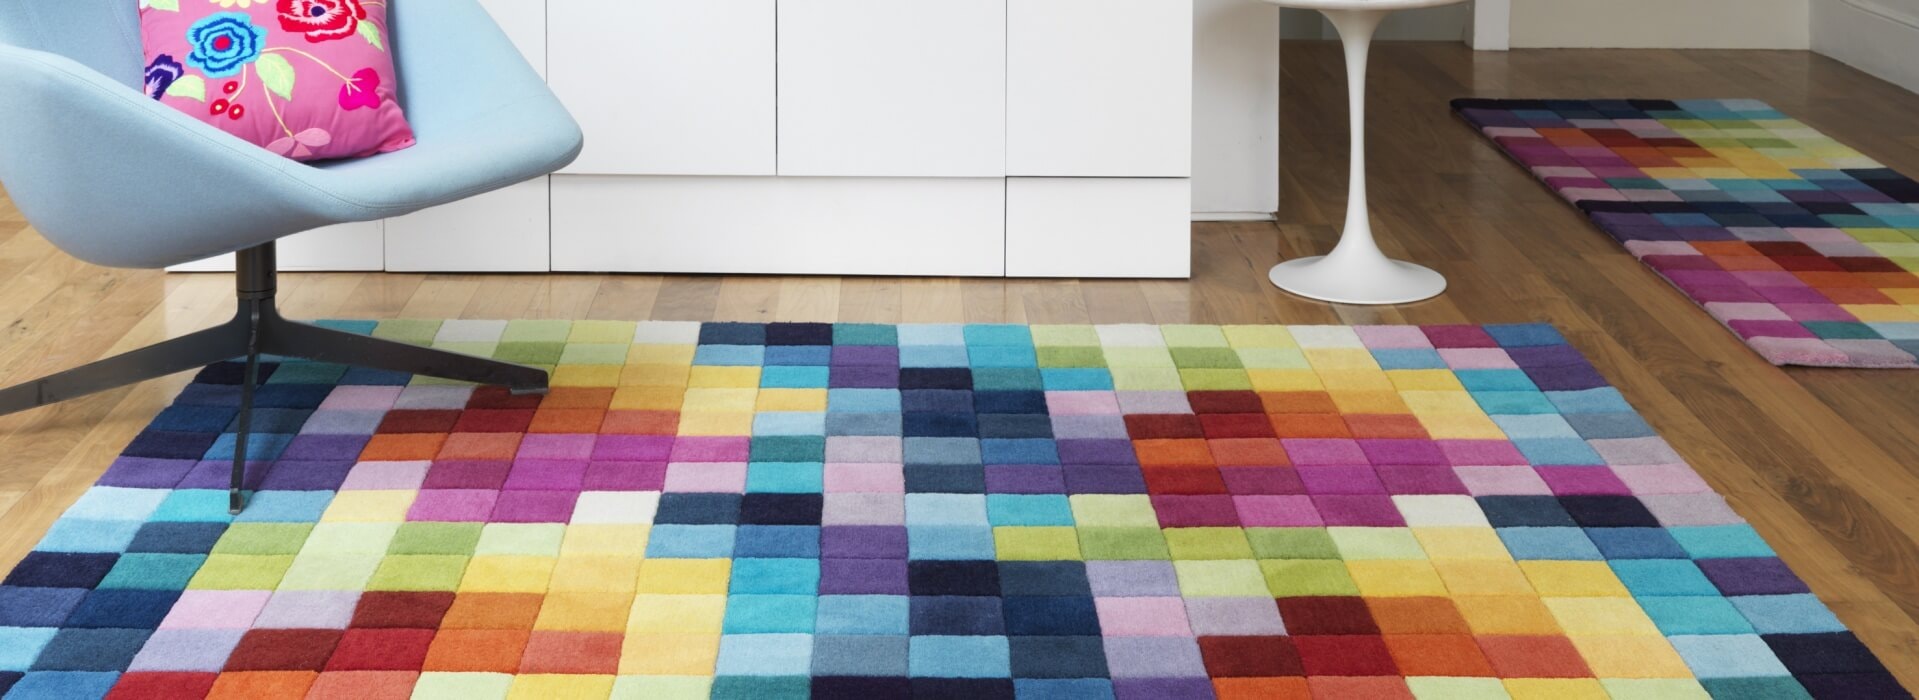 multi-colored carpet for a children's room